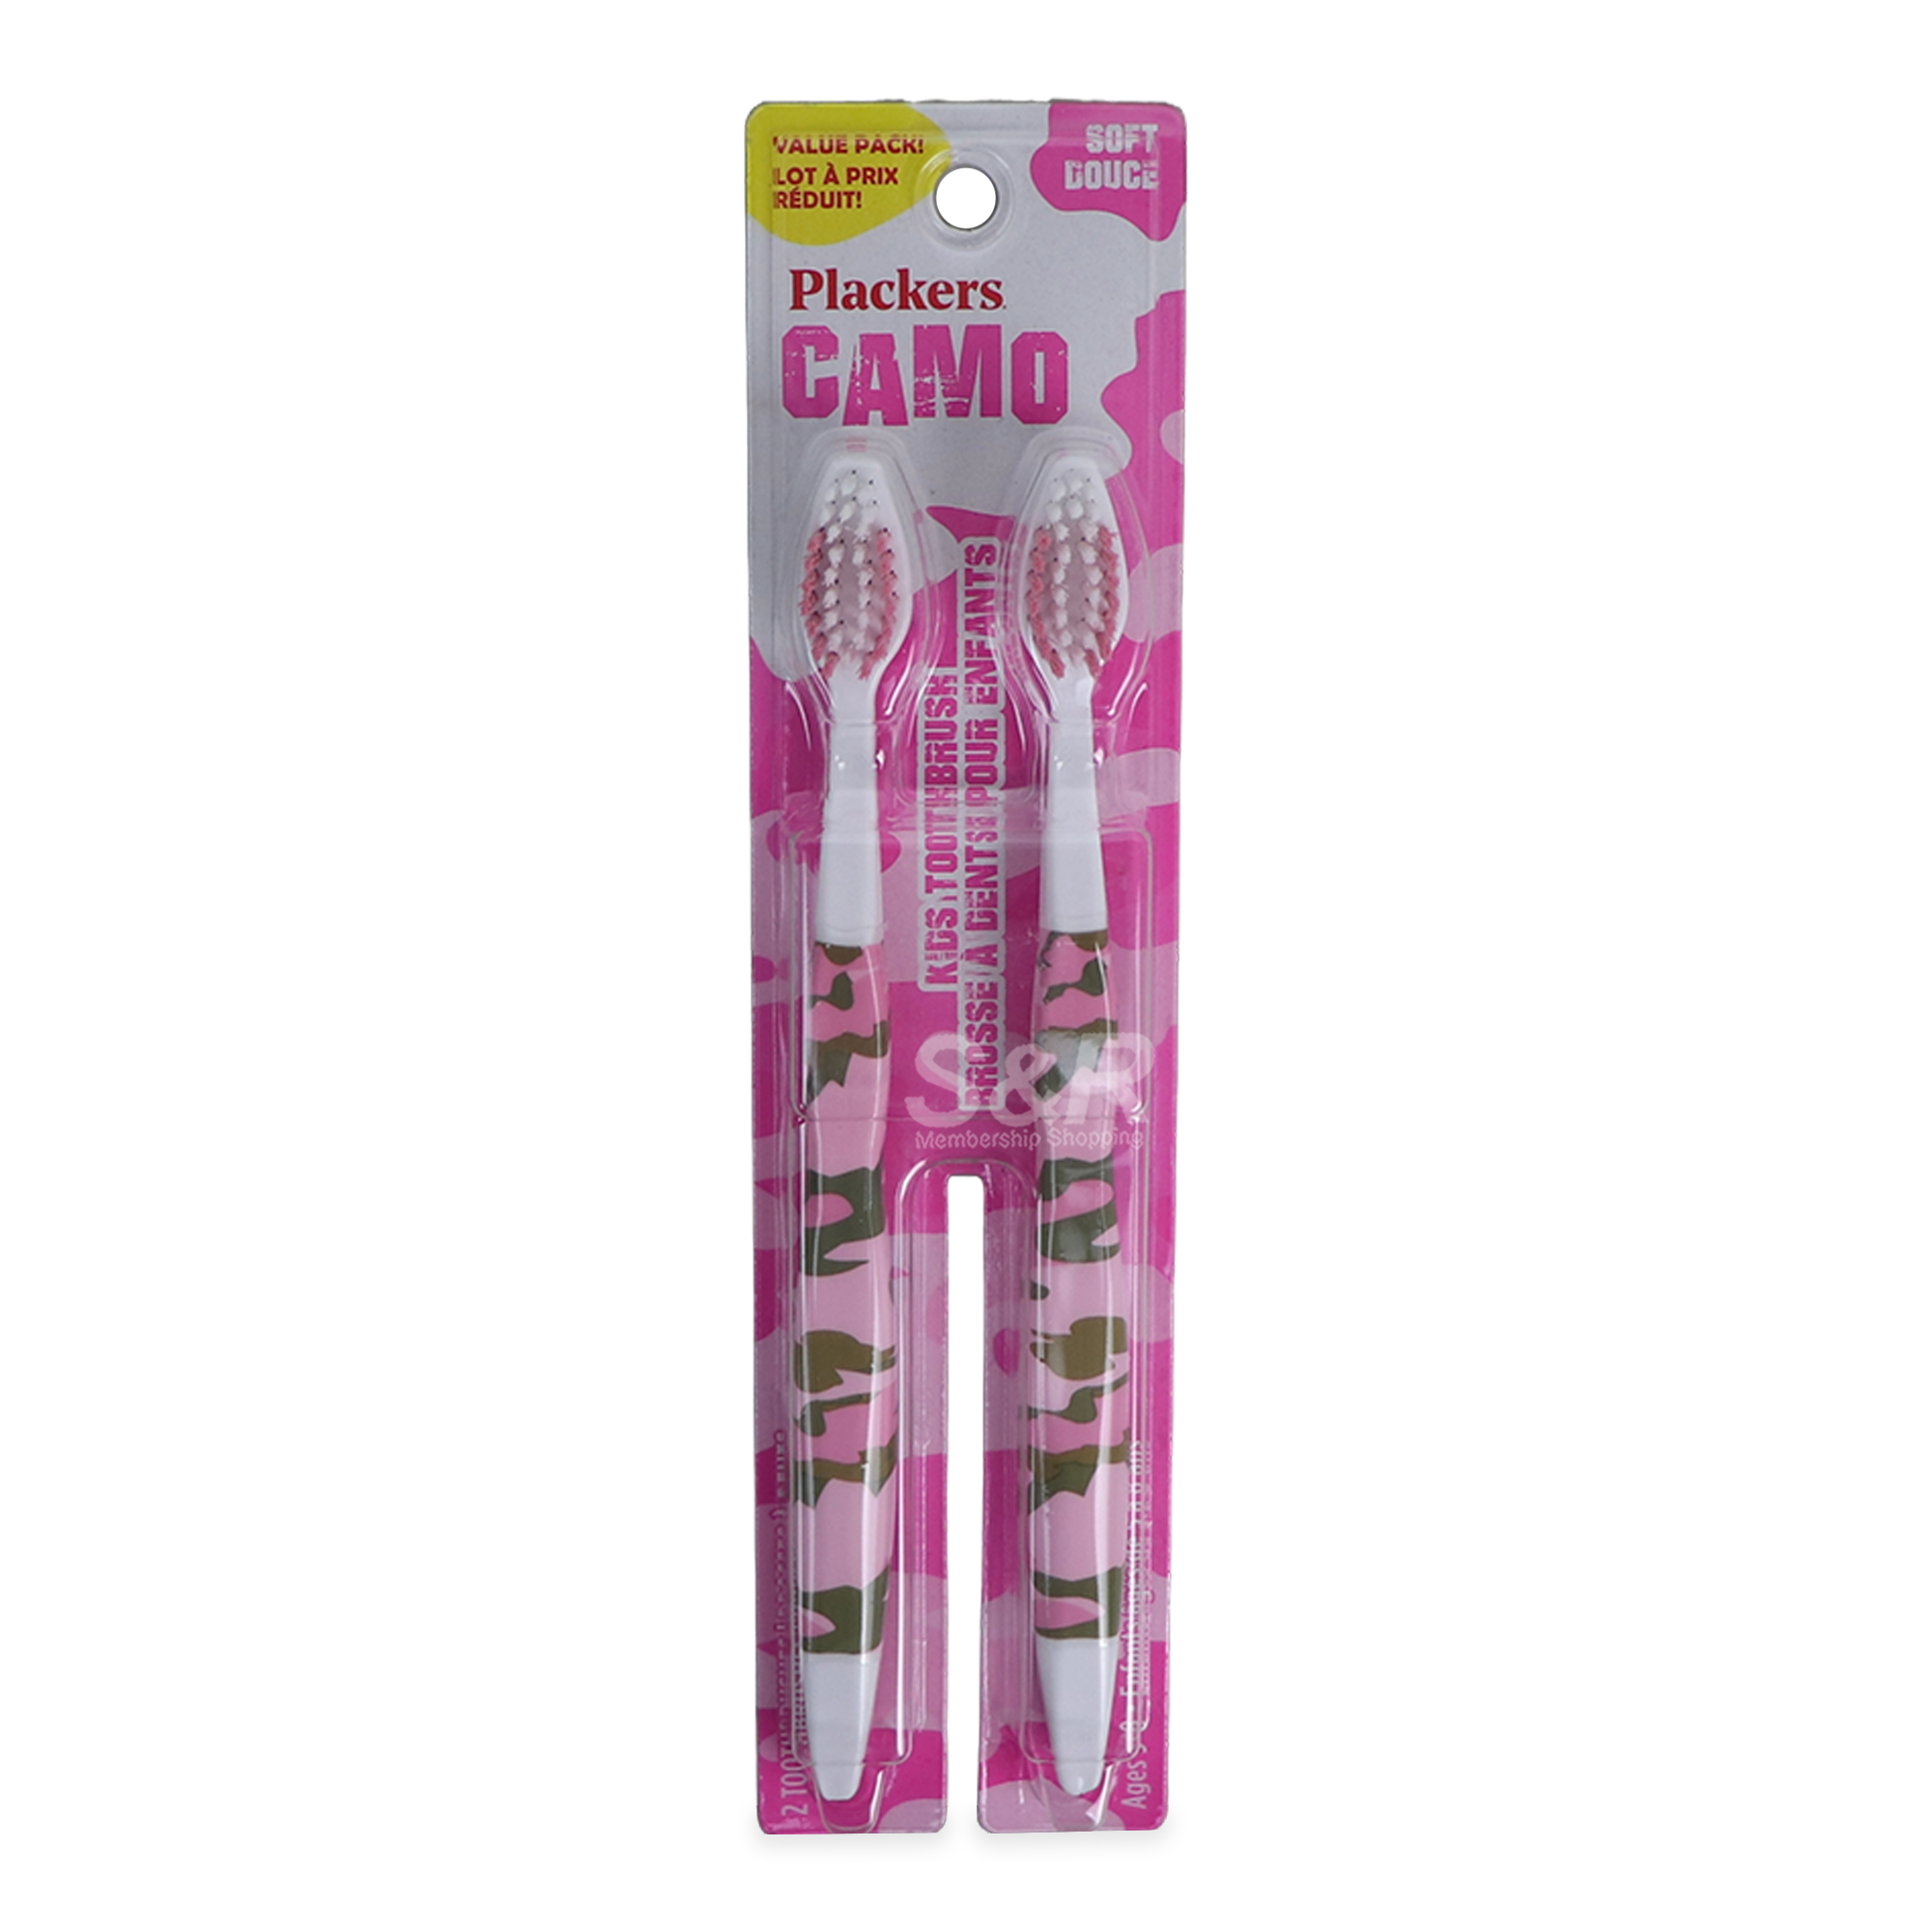 Plackers Camo Kids Girl Toothbrush 2pcs